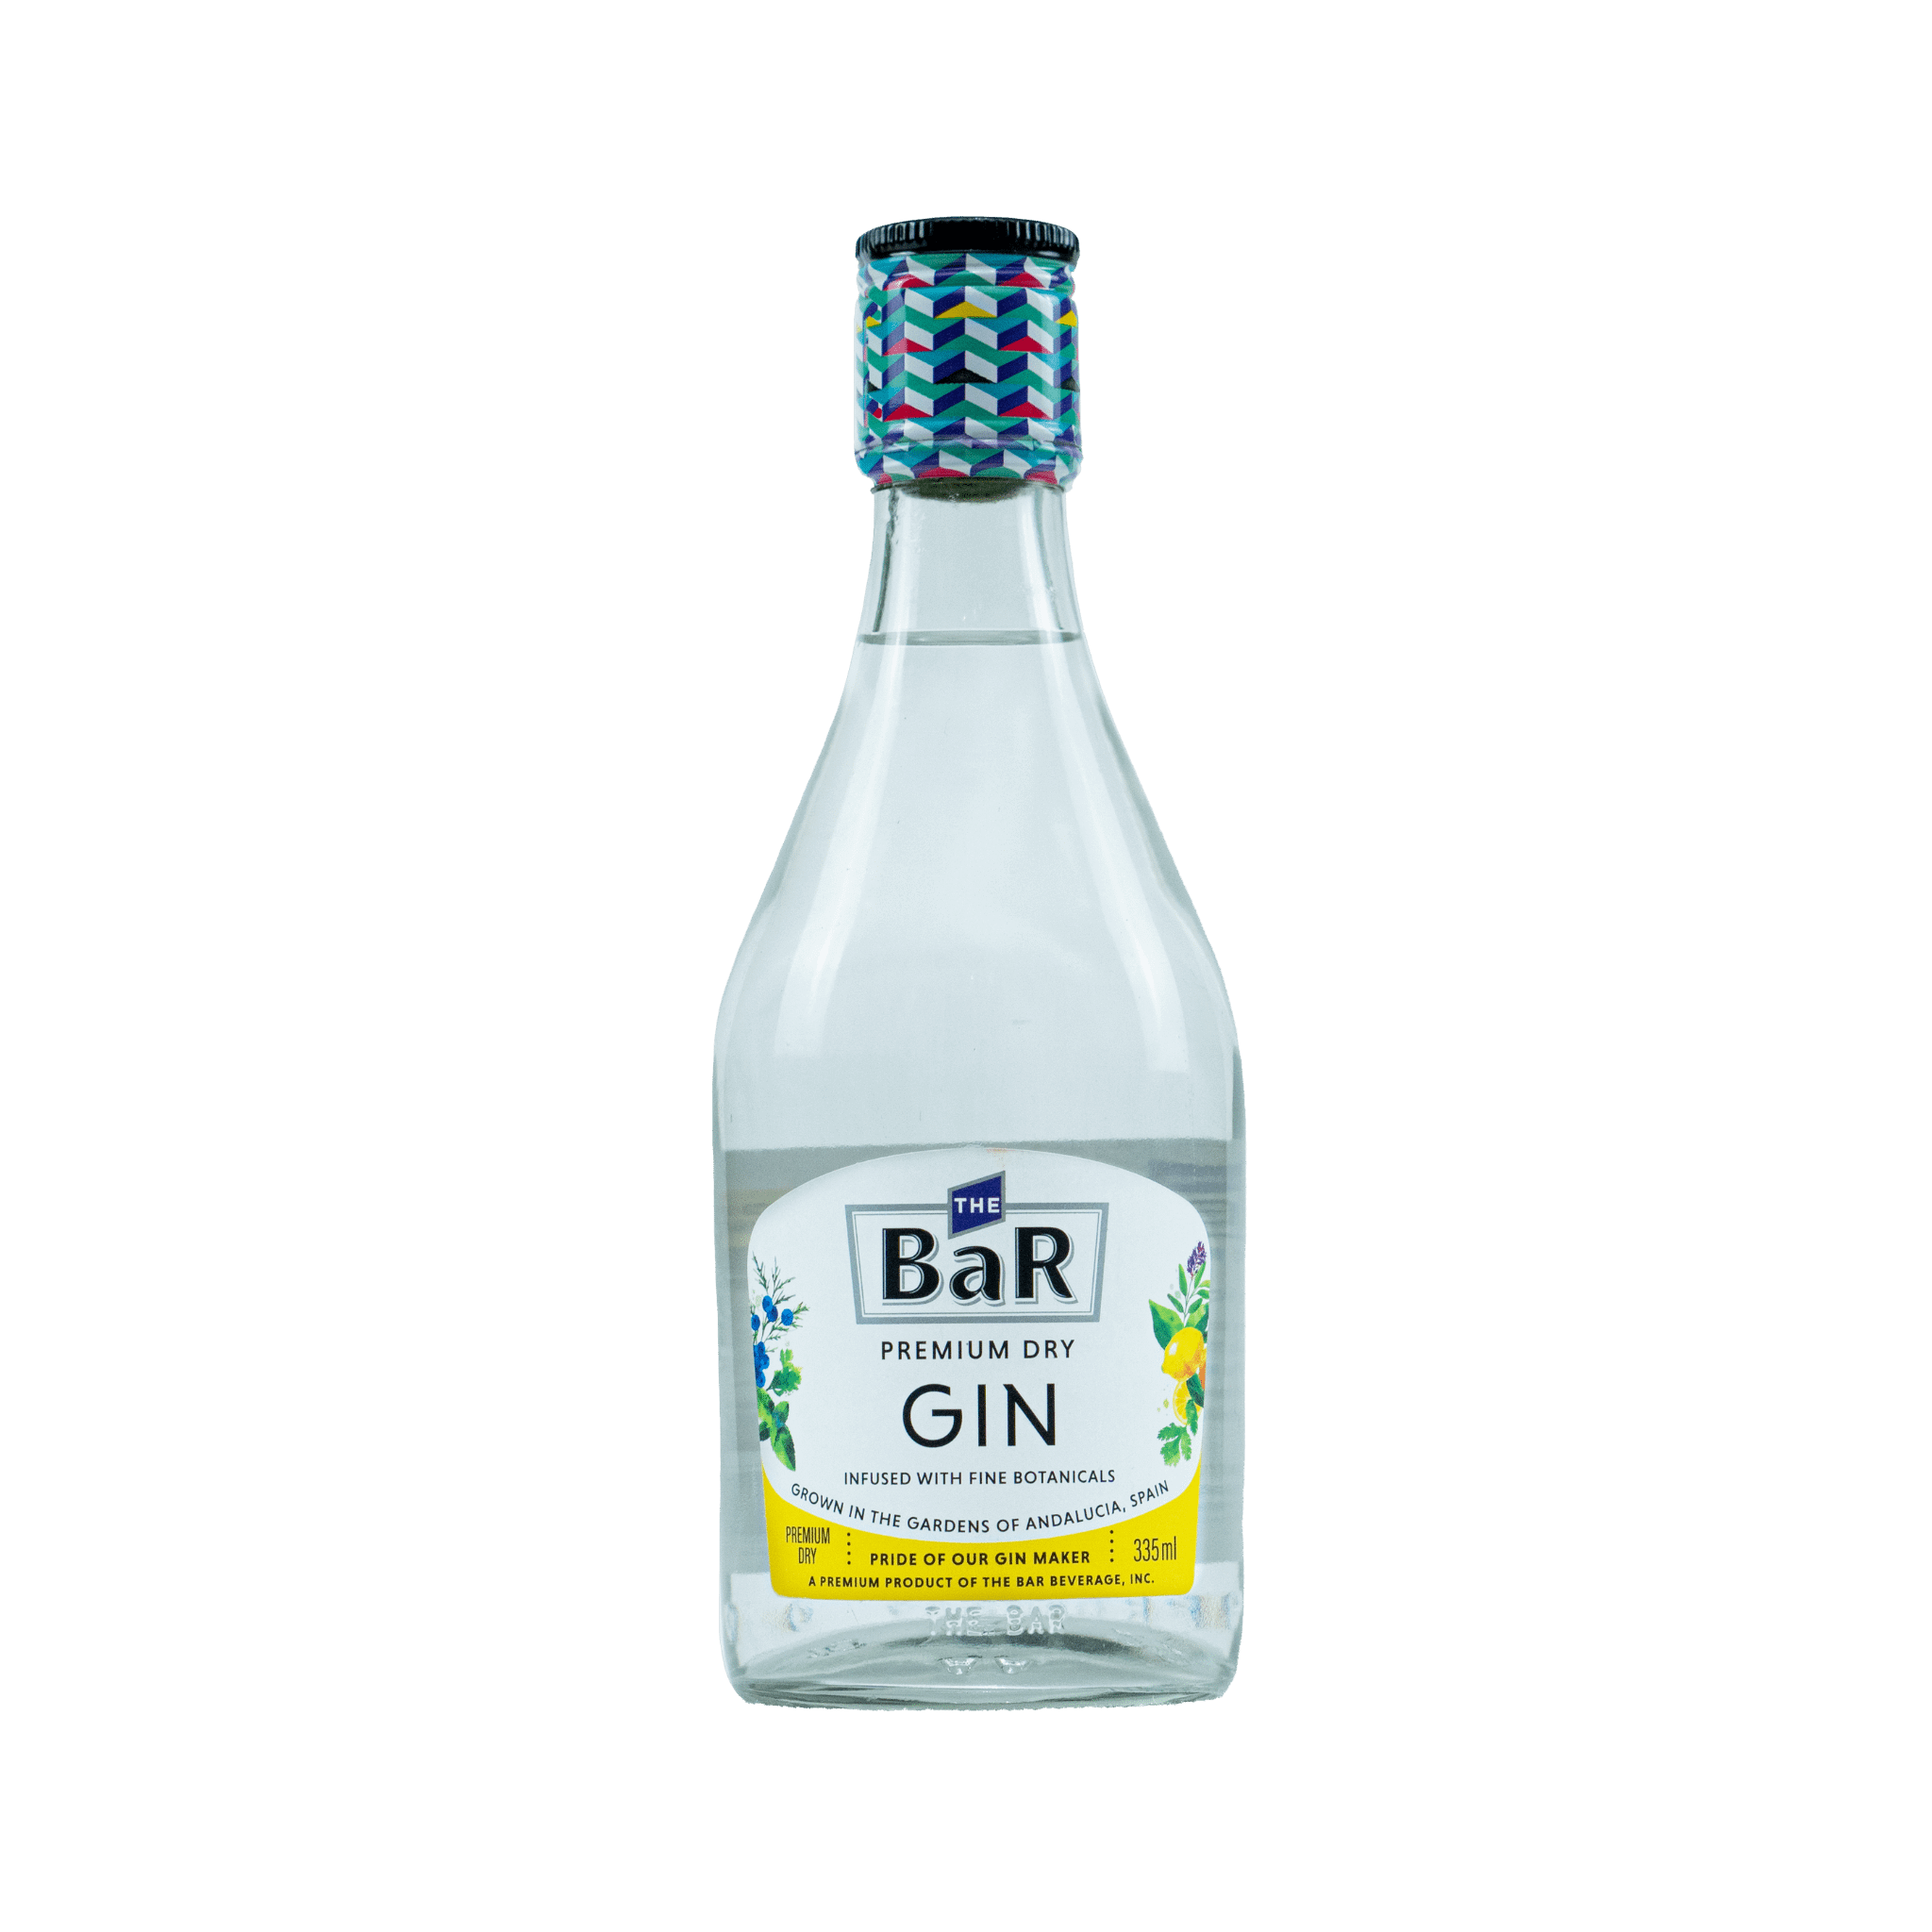 The BaR Premium Dry Gin 335ml at ₱69.00